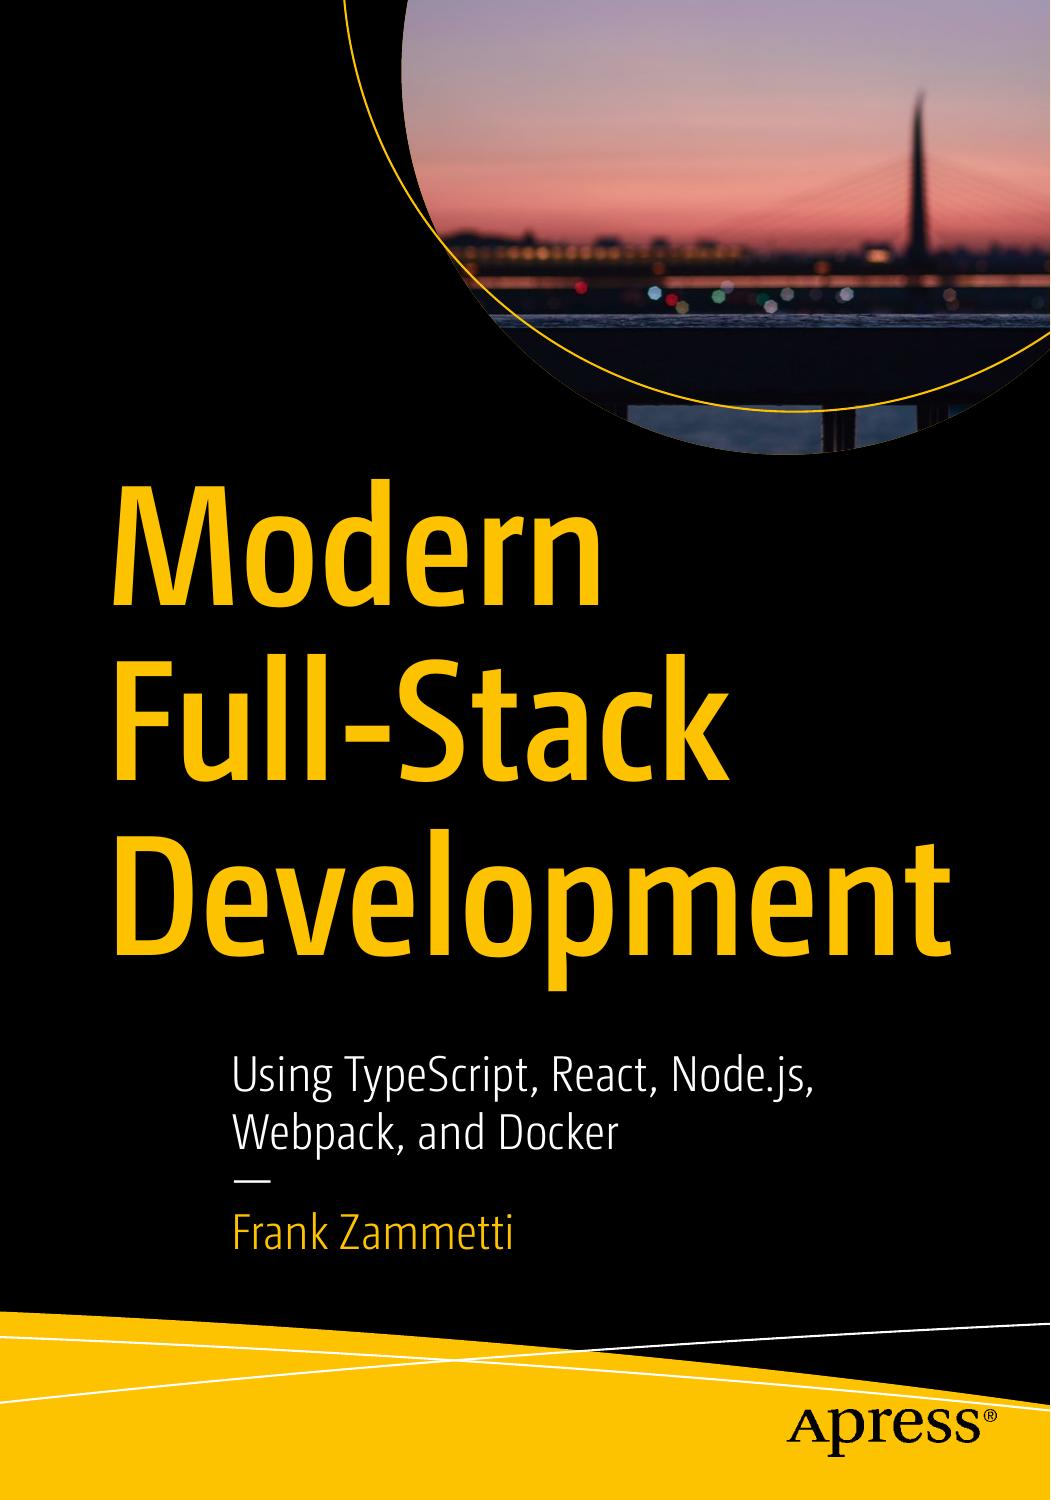 Modern Full-Stack Development Using TypeScript, React, Node.js, Webpack, and Docker by Frank Zammetti (z